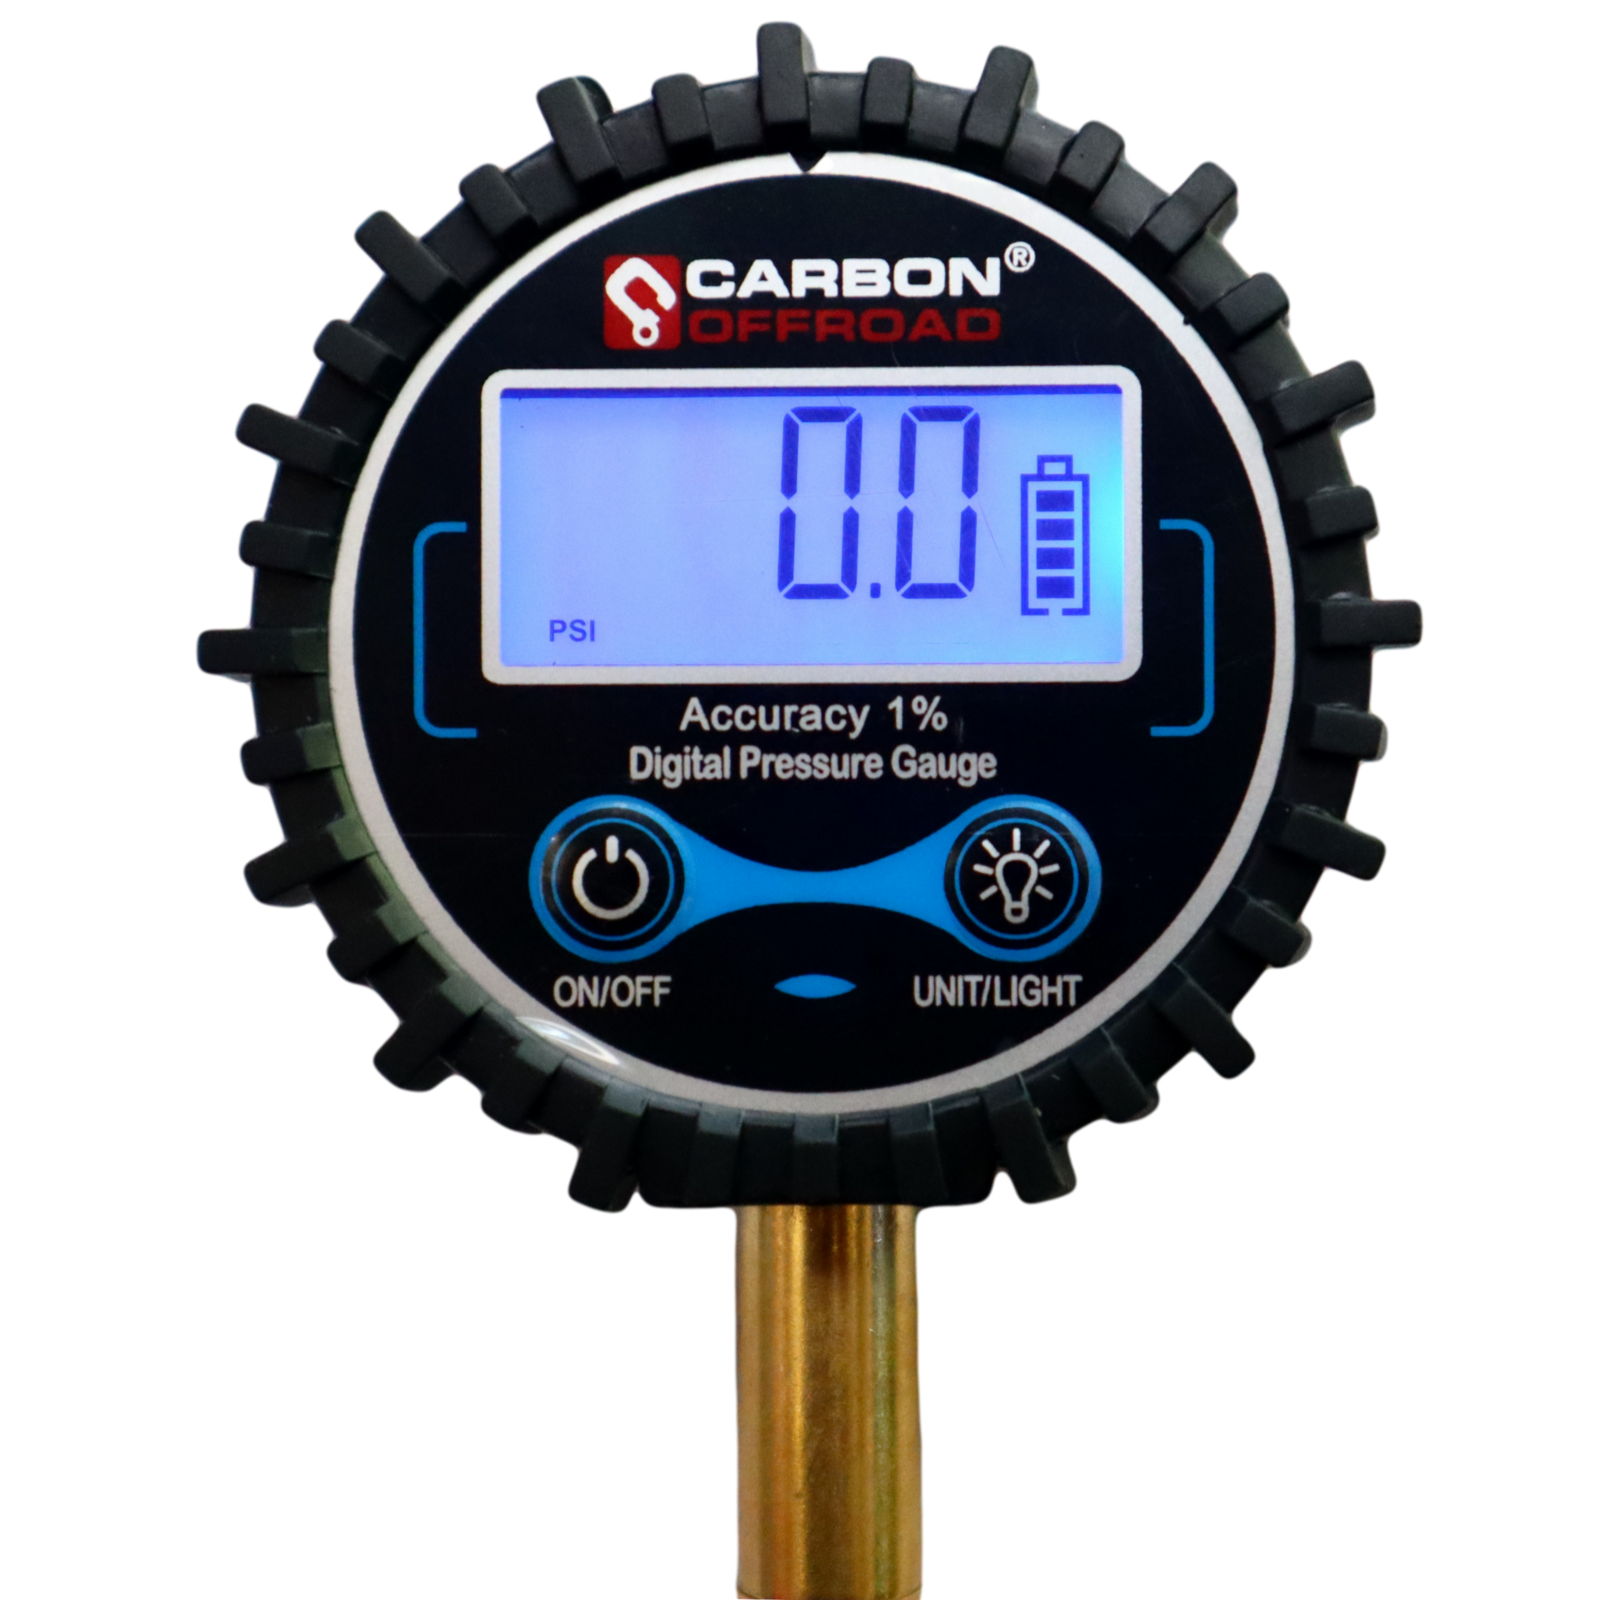 Carbon Offroad Speedy Tyre Deflator / Pressure Gauge Analogue or Digital